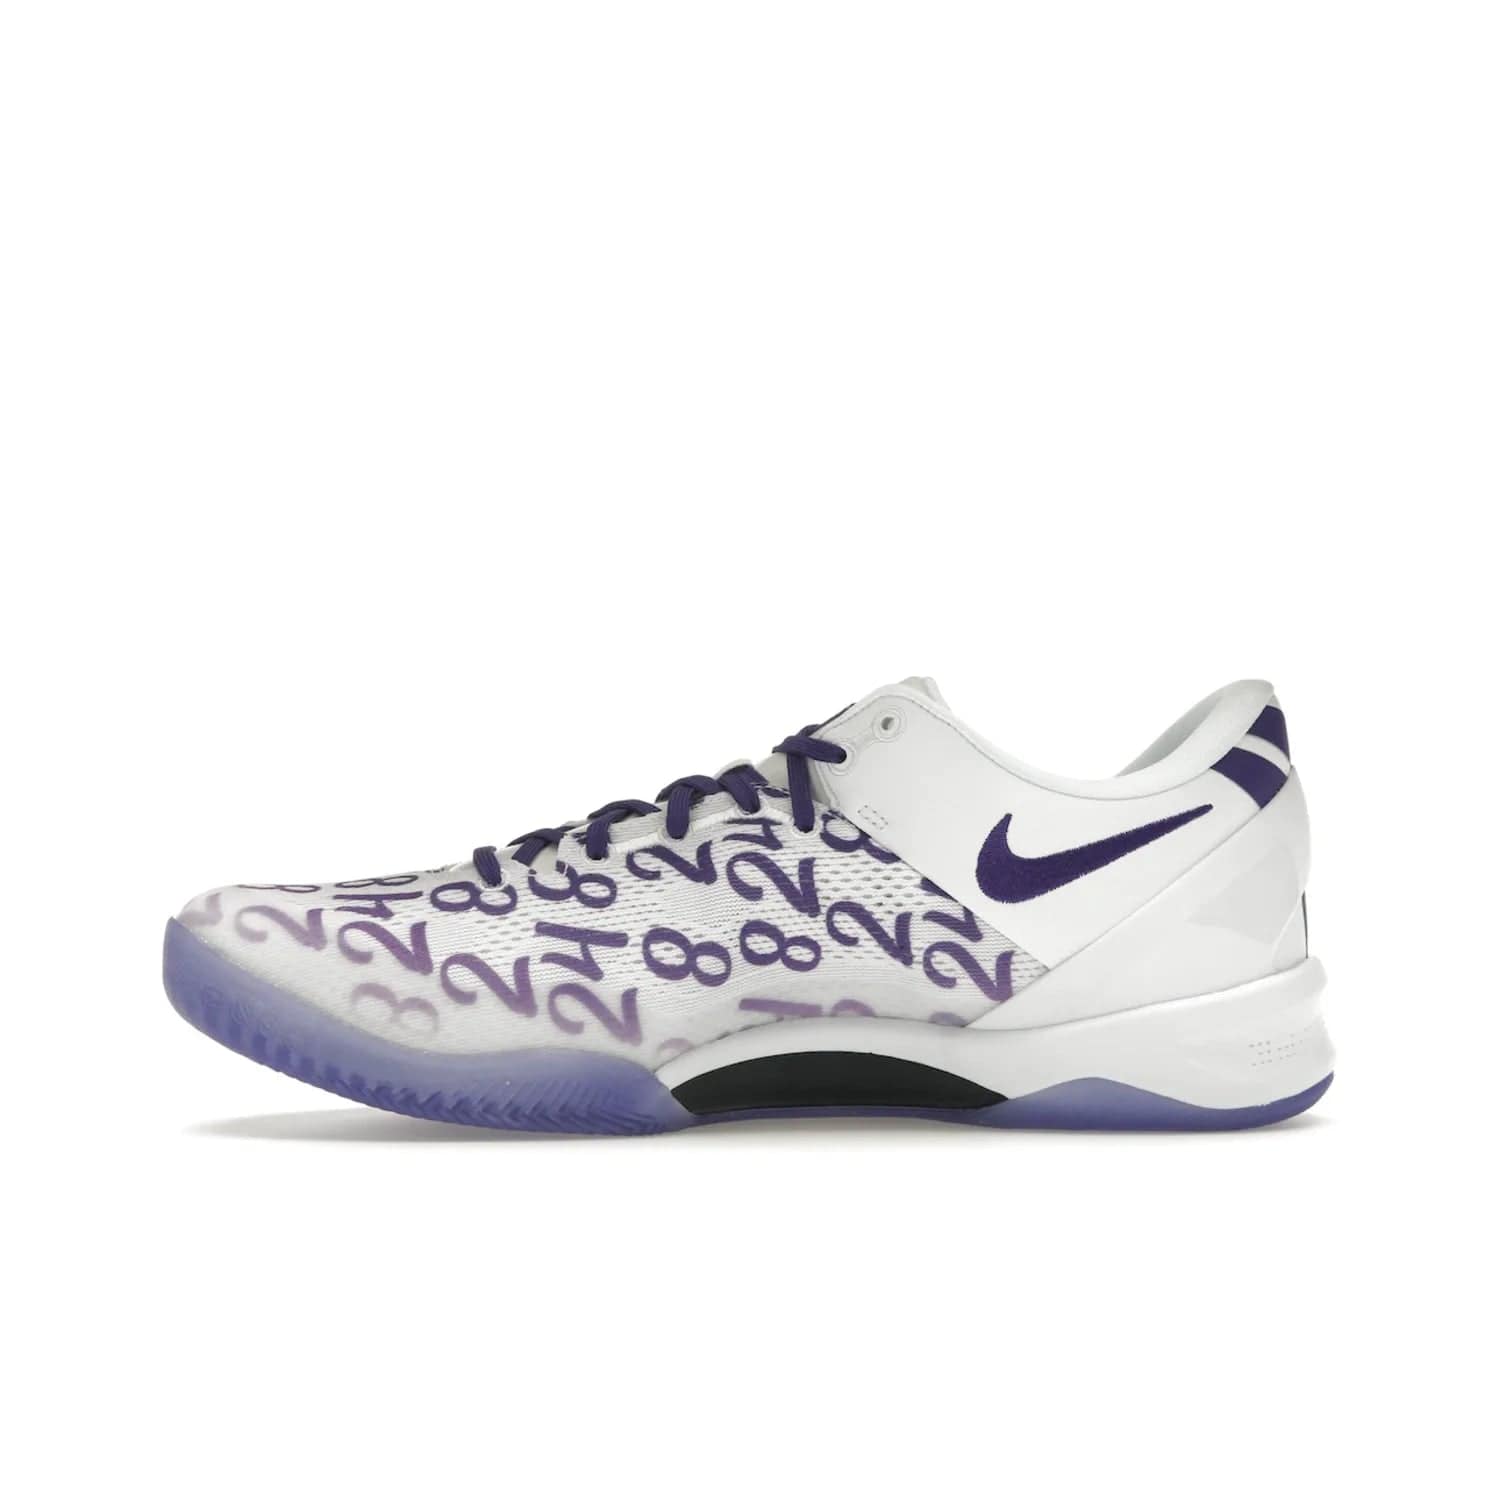 Nike Kobe 8 Protro Court Purple - Image 19 - Only at www.BallersClubKickz.com - 